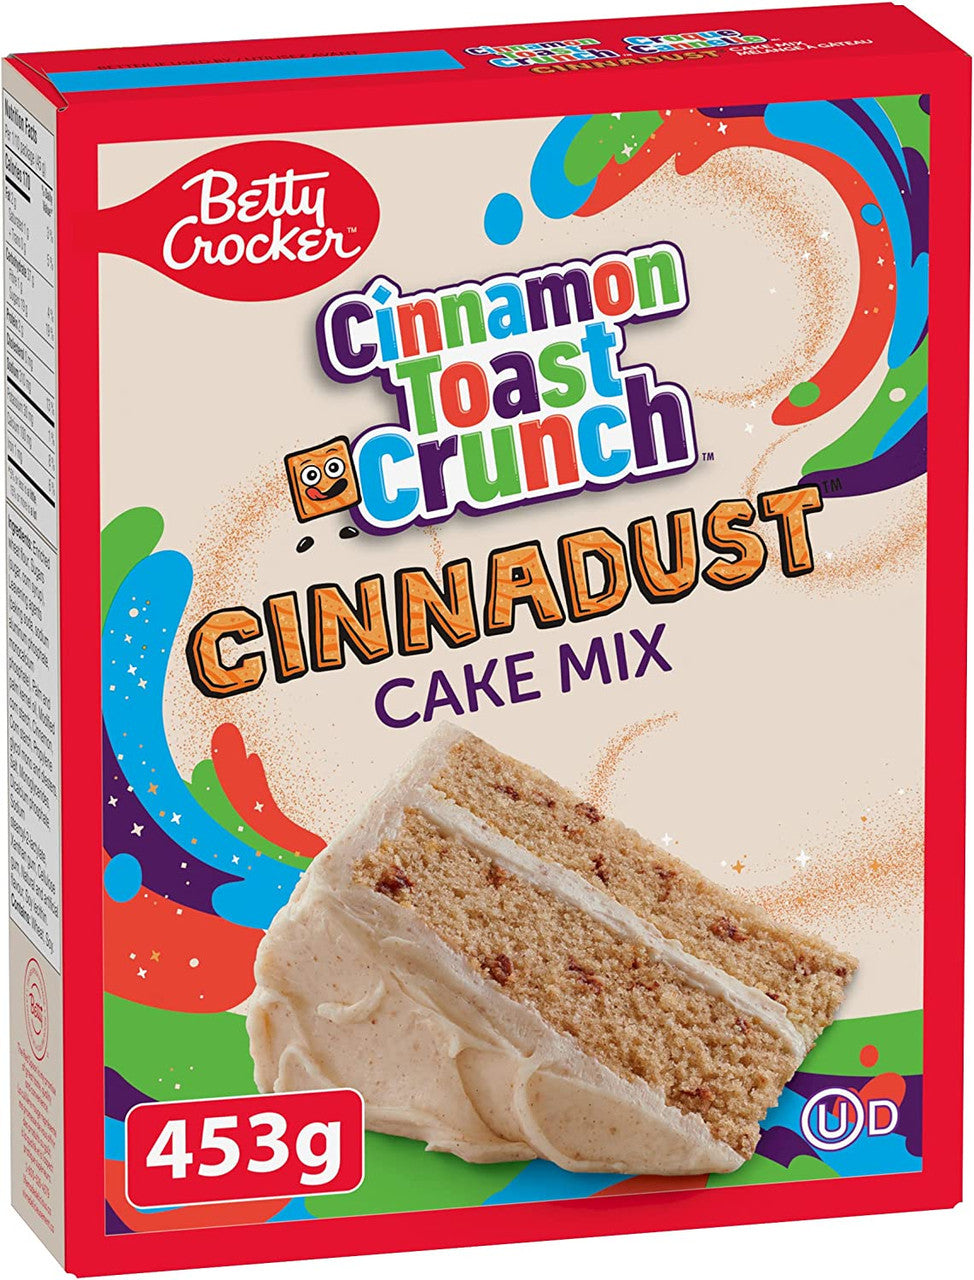 Betty Crocker Cinnamon Toast Crunch Cake Mix, 453g/1 lb. Box {Imported from Canada}